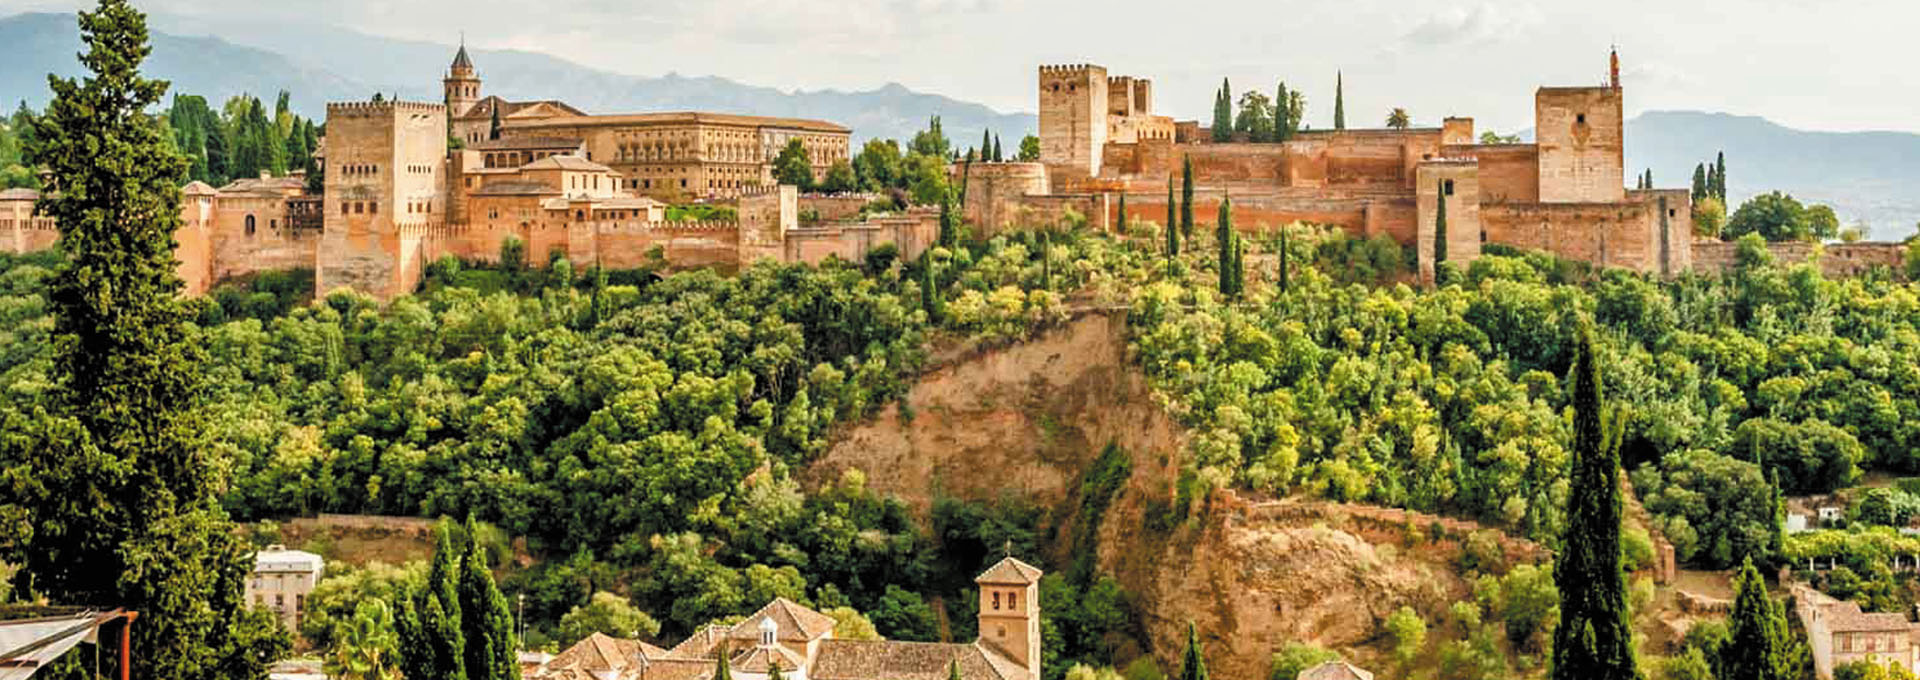 Vista panorámica de La Alhambra de Granada